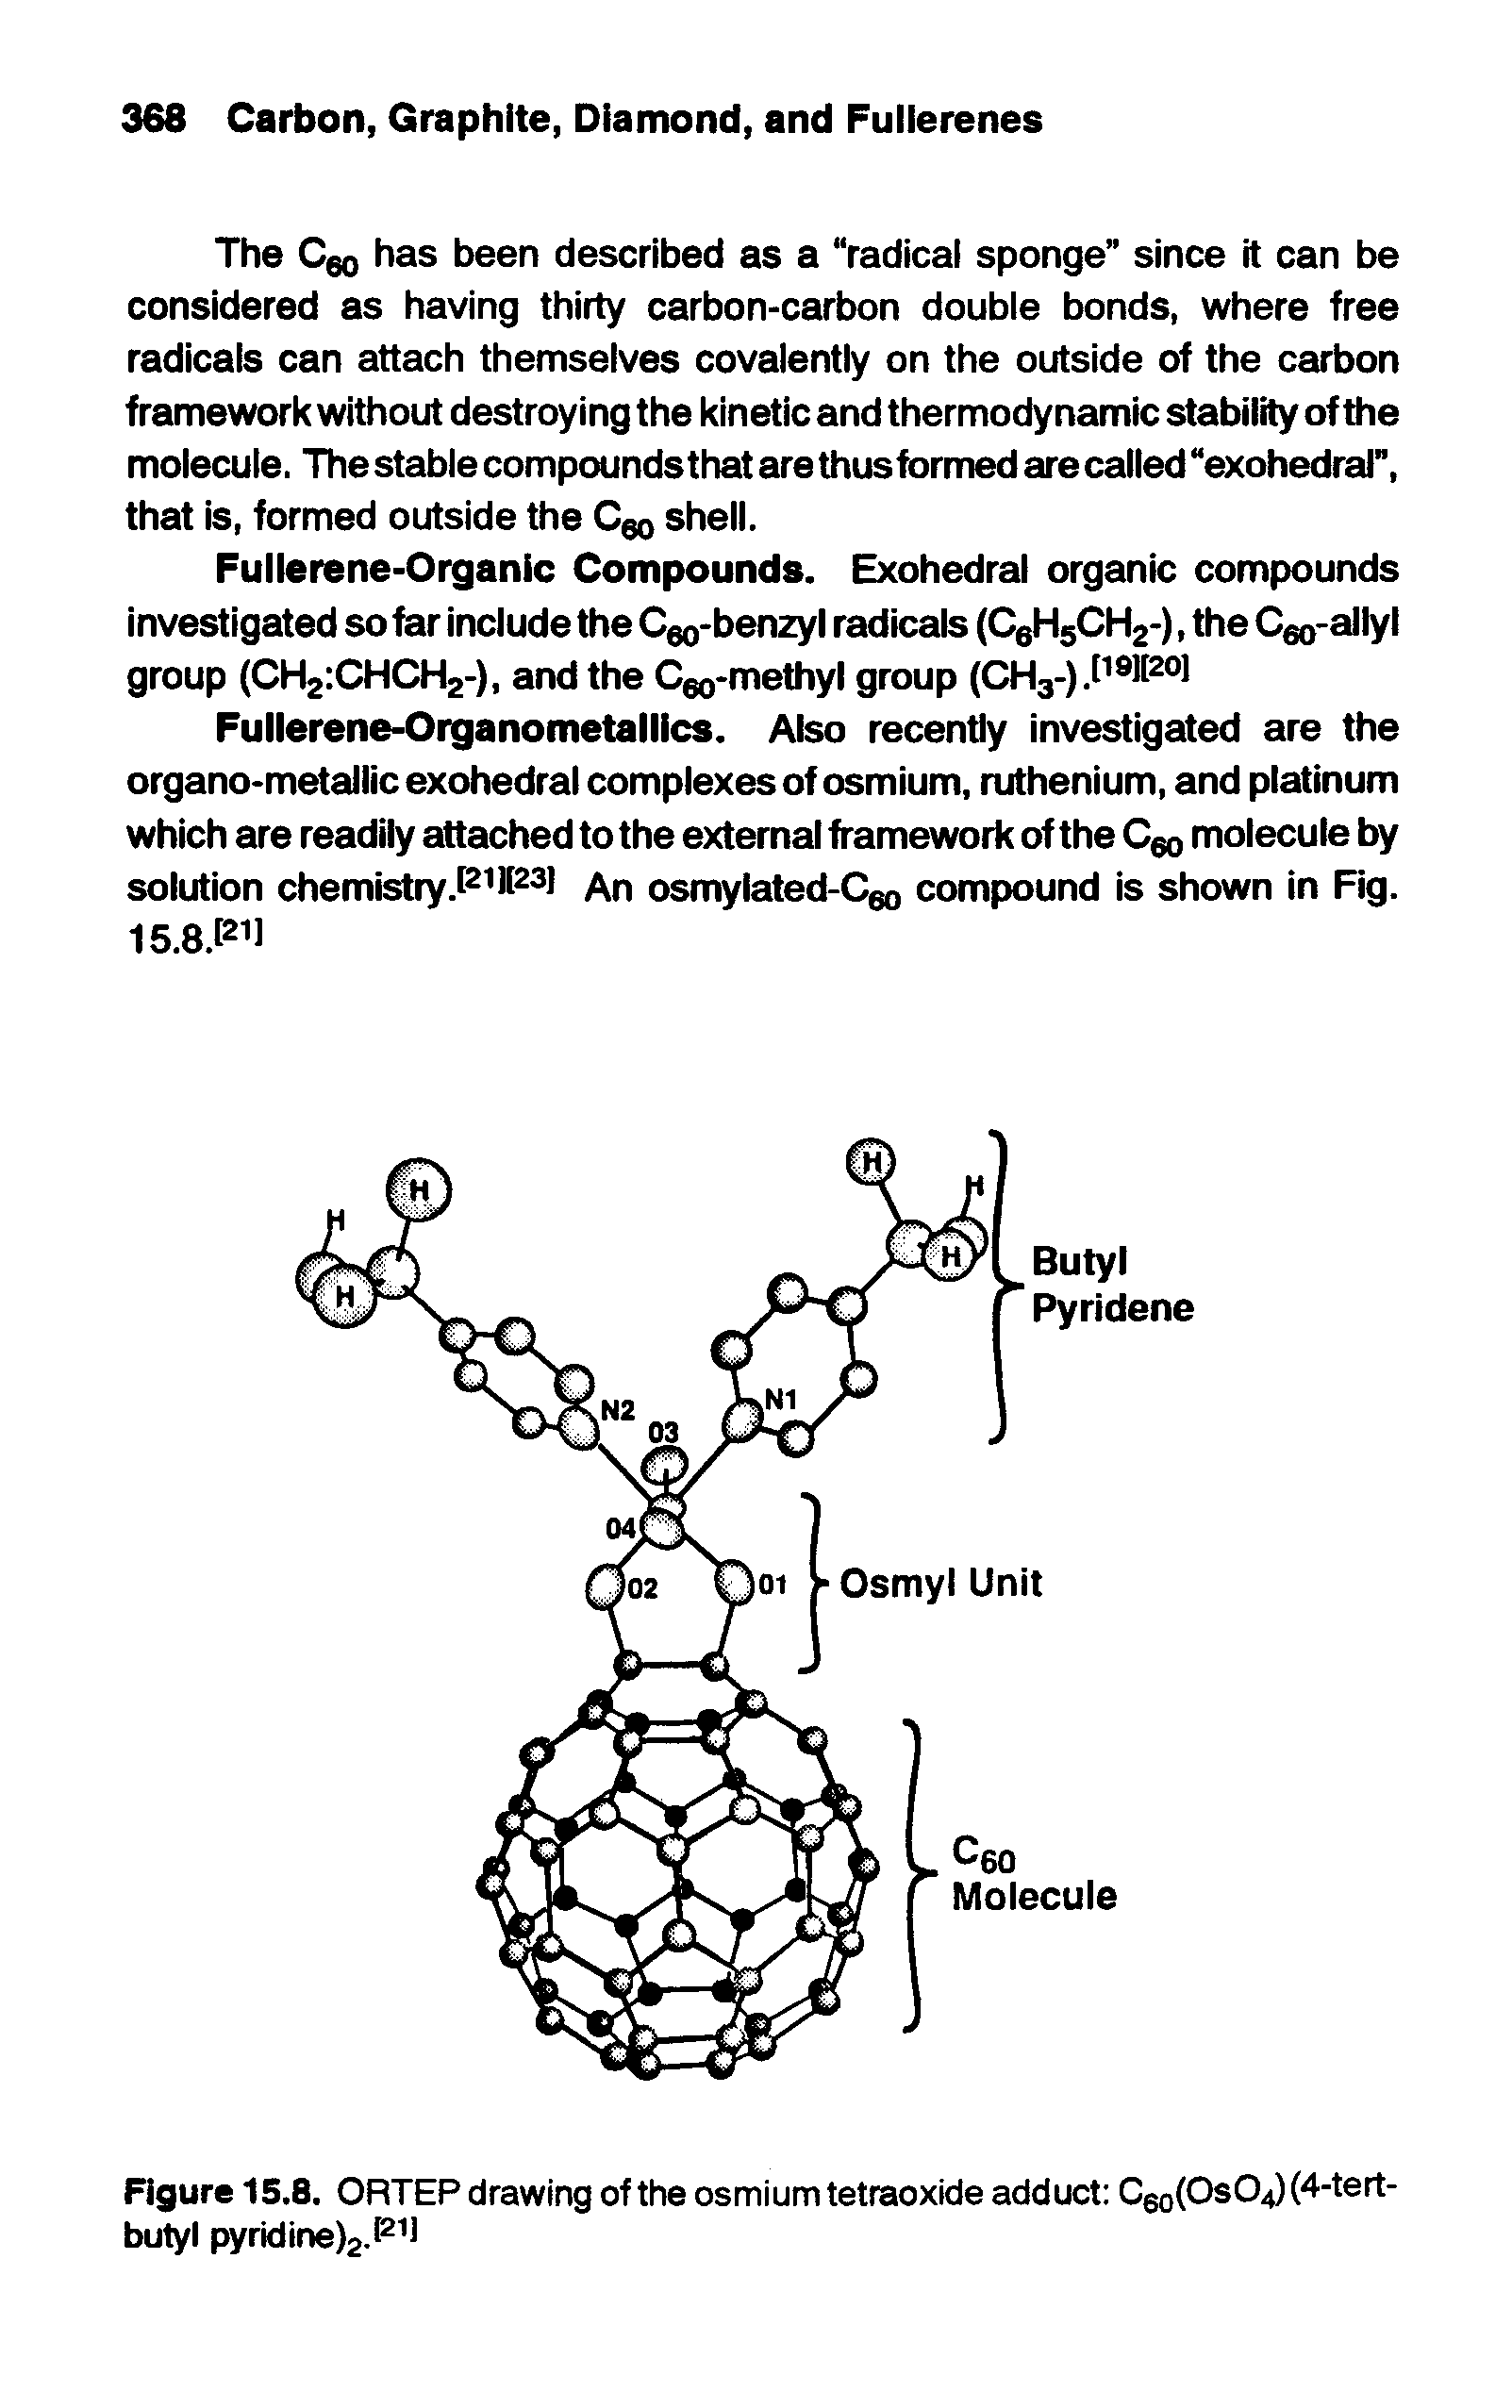 Figure 15.8. ORTEP drawing of the osmium tetraoxide adduct C6o(Os04) (4-tert-butyl pyridine)2.P l...